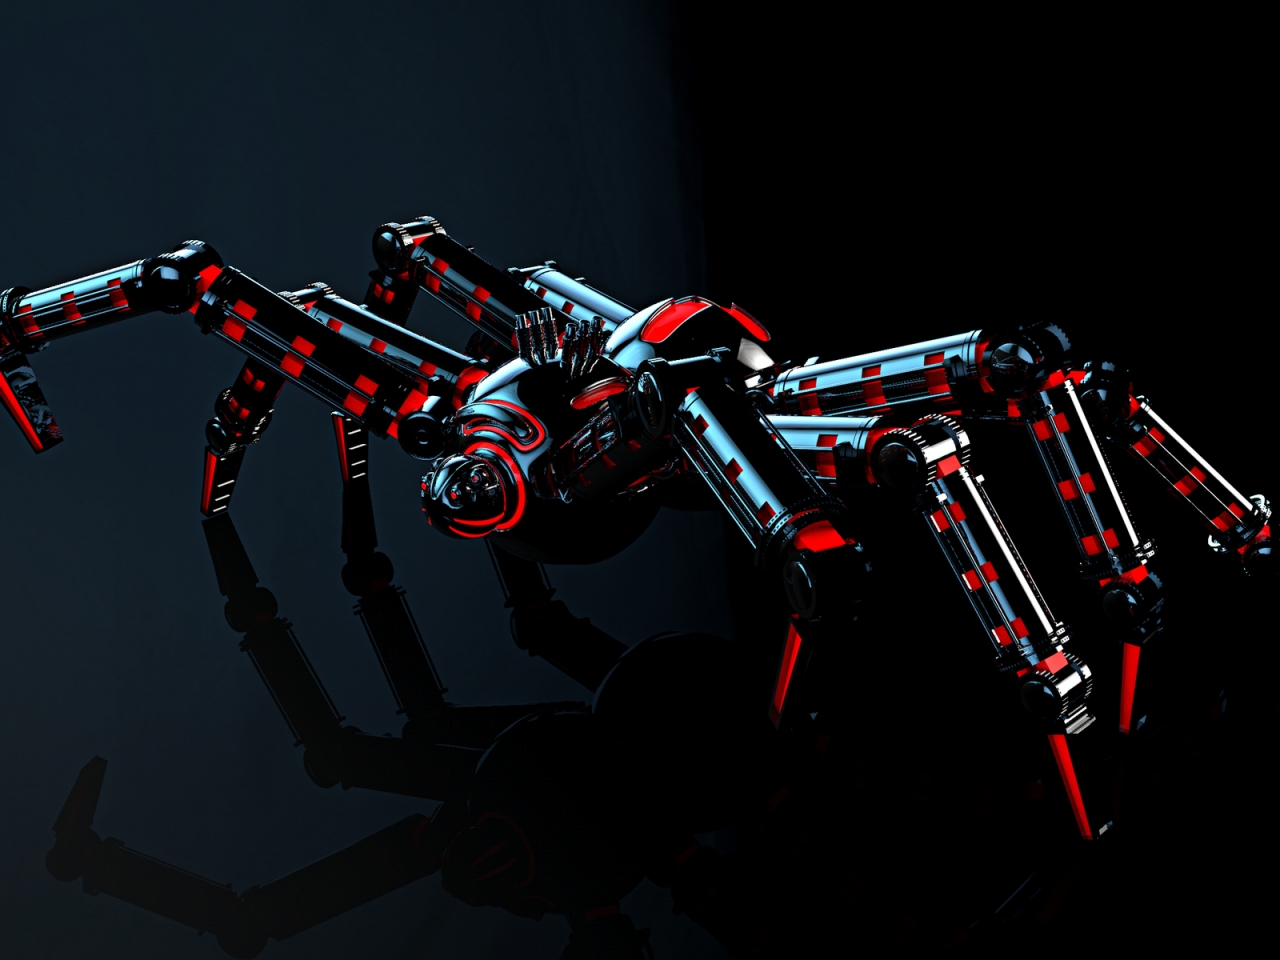 Spider Robot for 1280 x 960 resolution